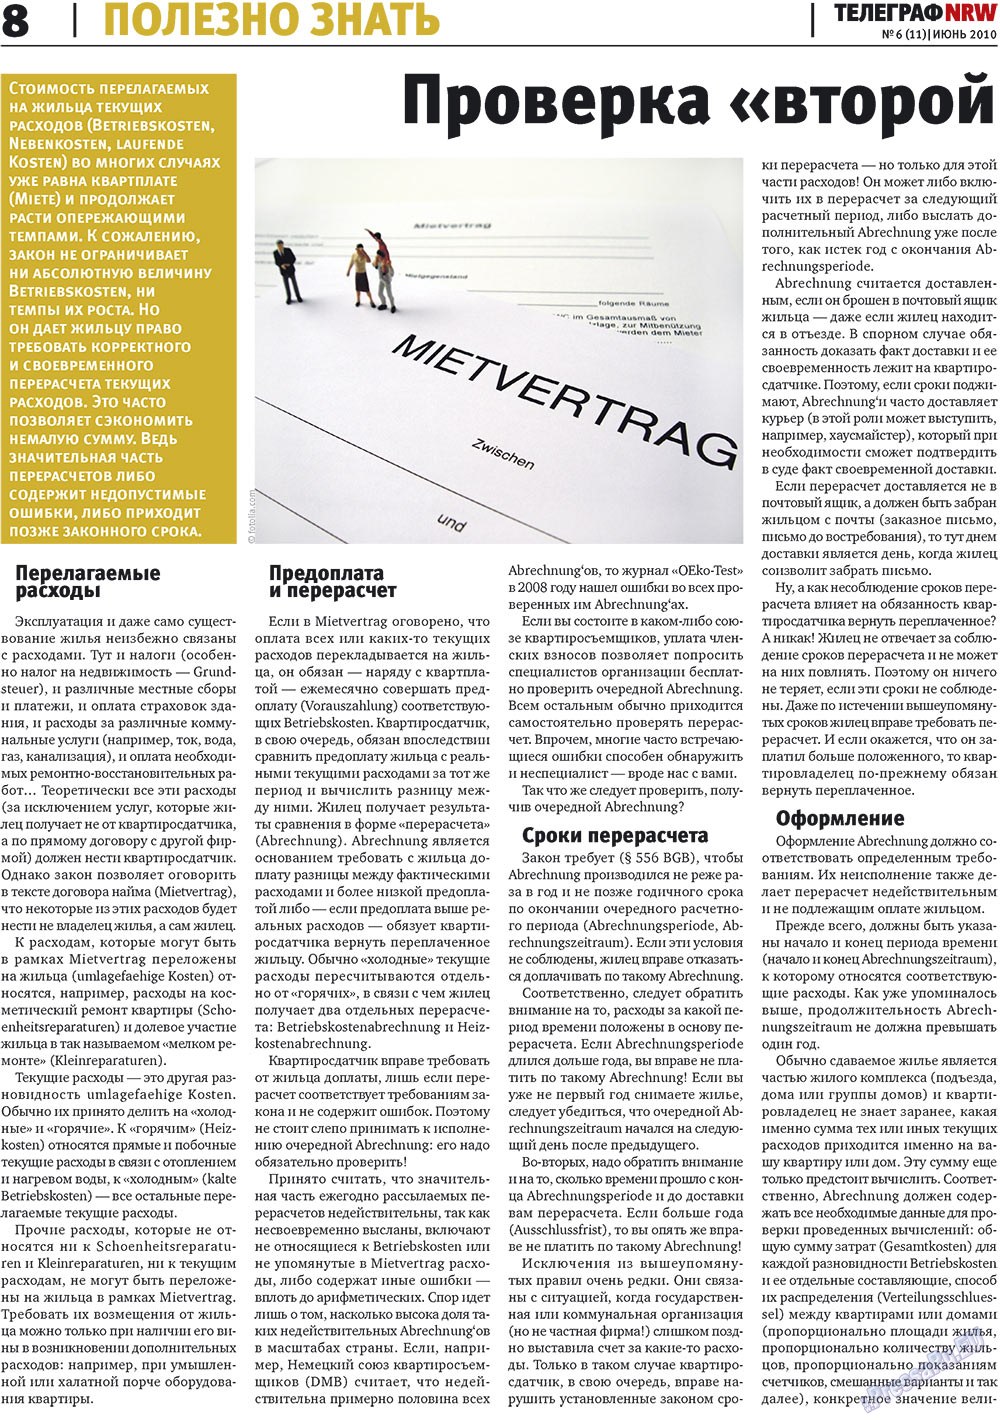 Телеграф NRW, газета. 2010 №6 стр.8